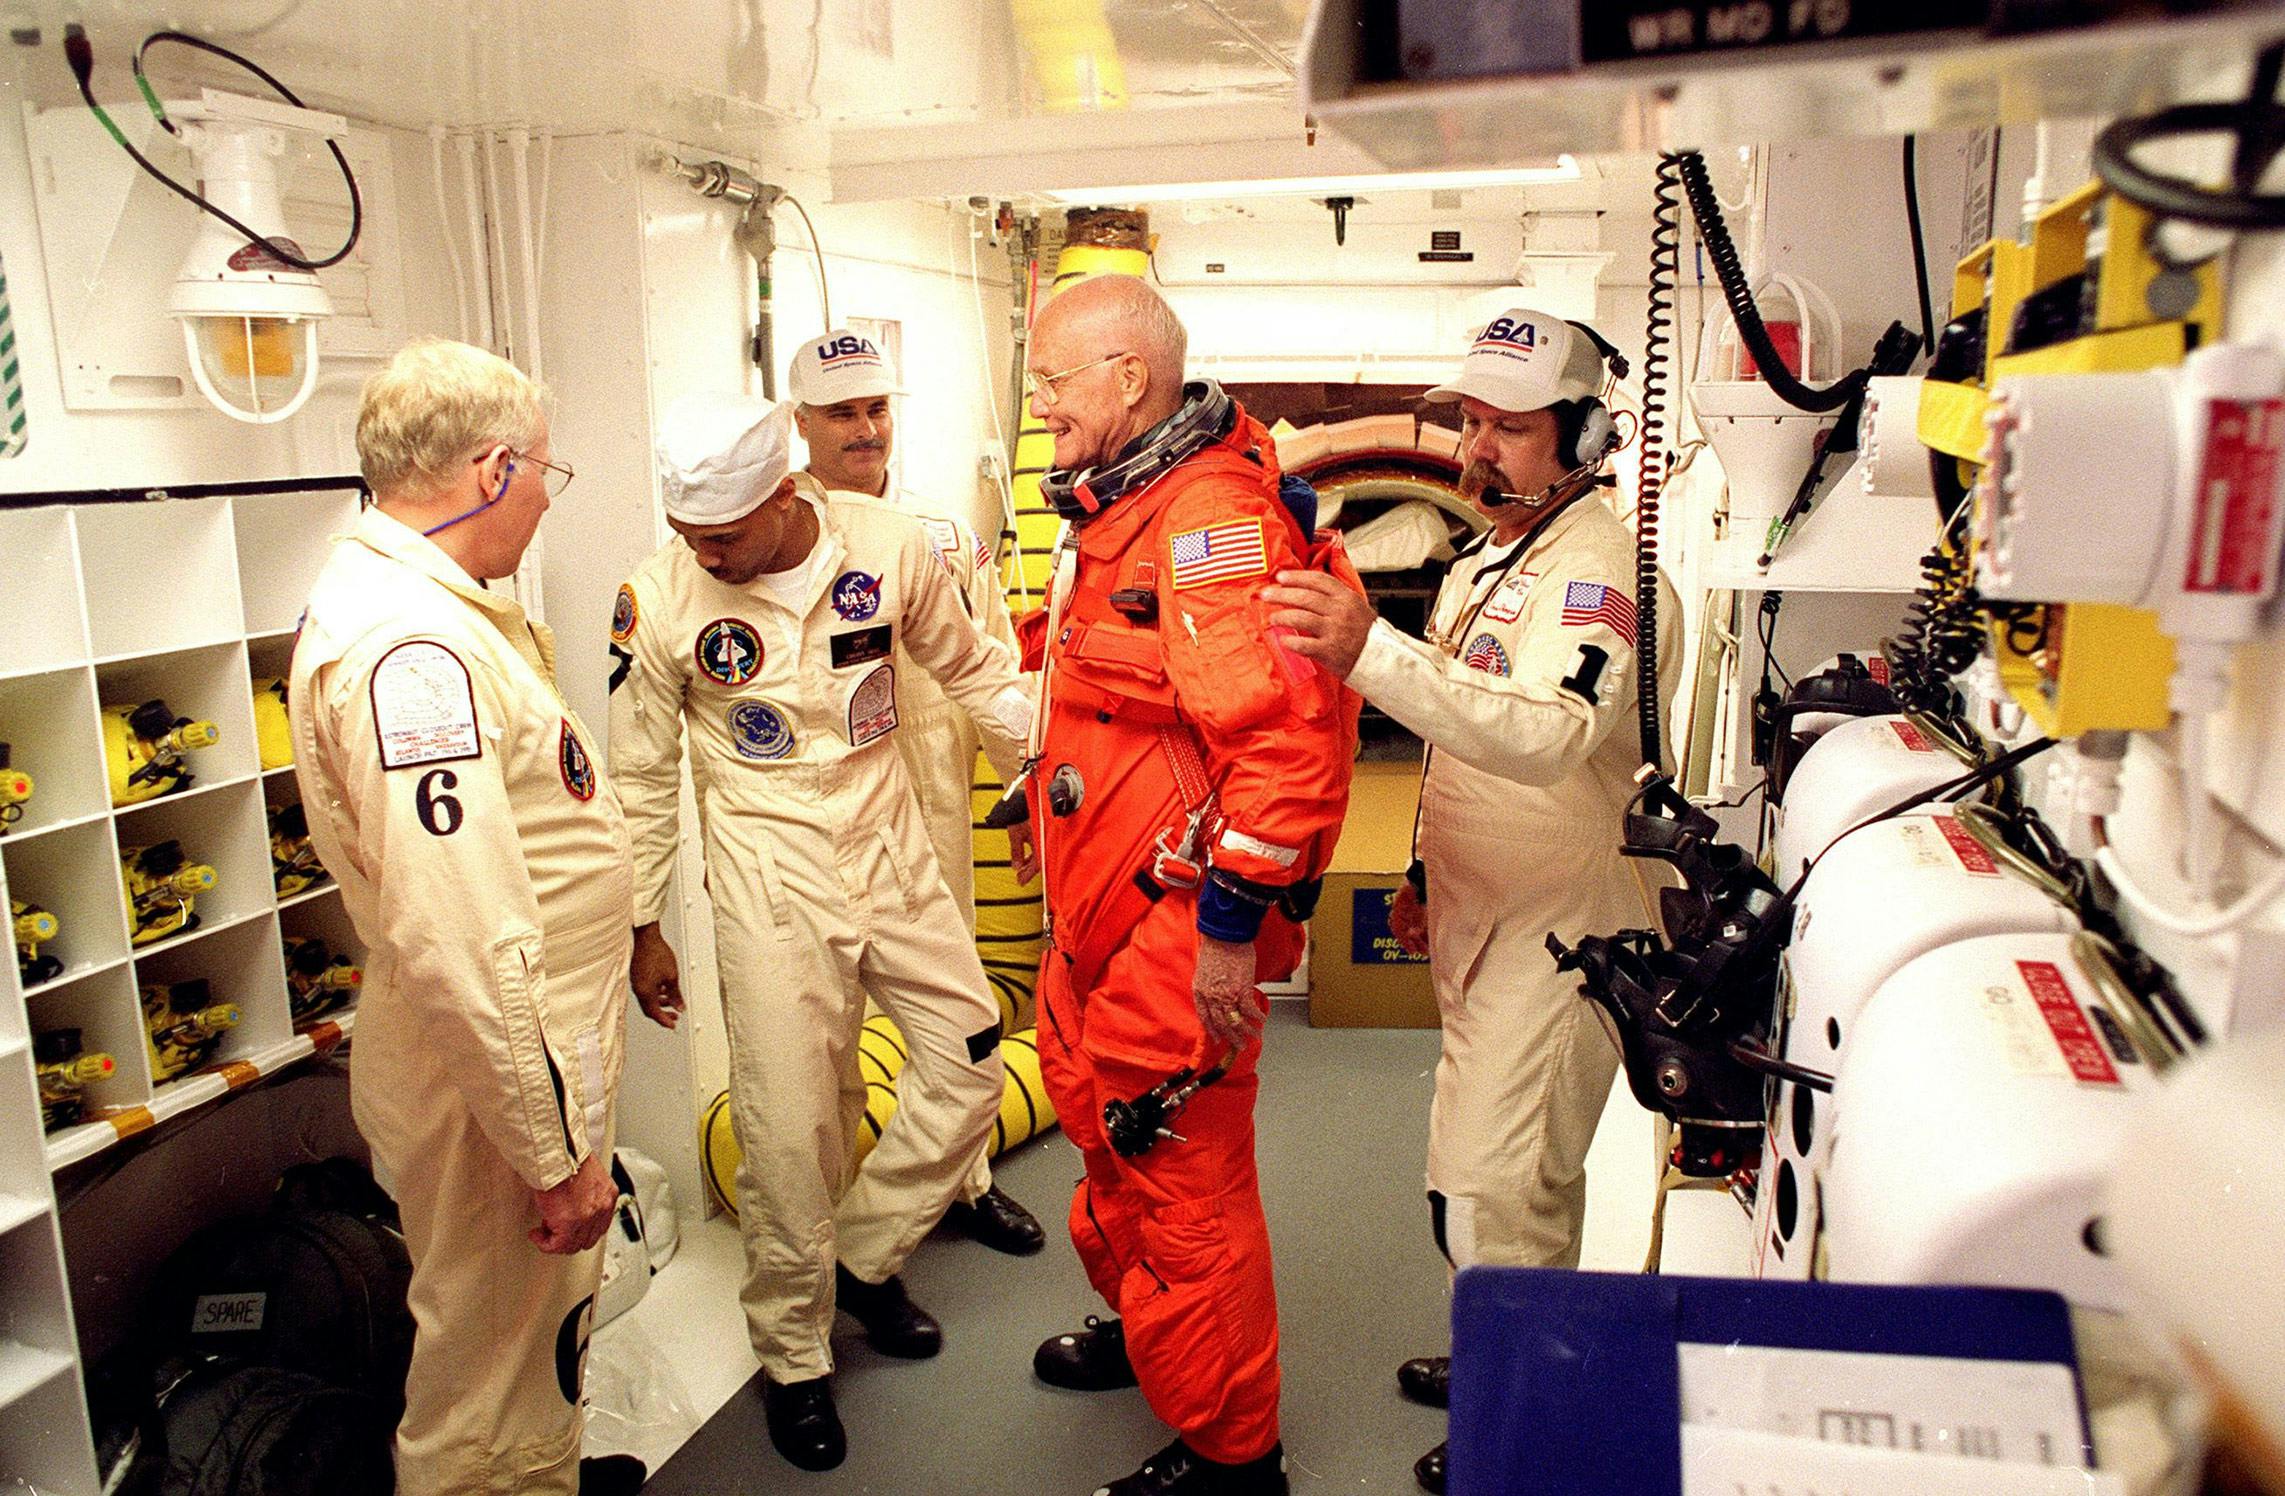 John Glenn getting dressed in an orange spacesuit. 